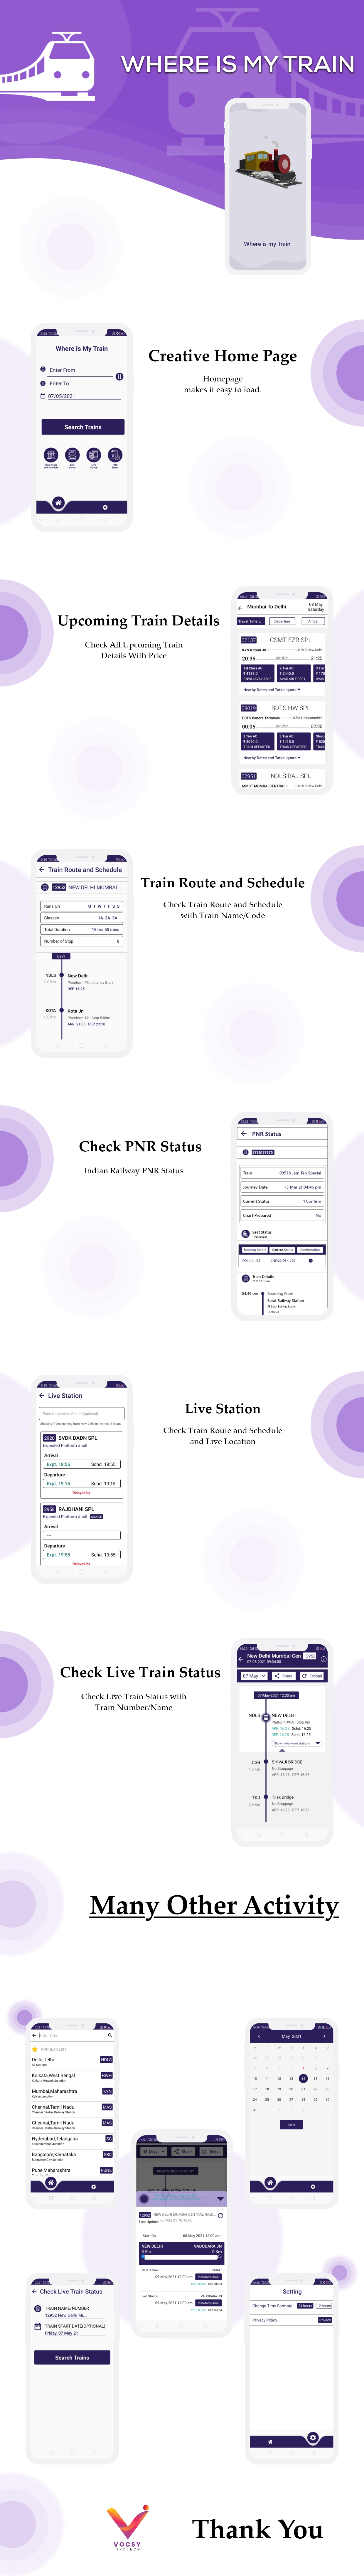 Indian Railway Train Status | Train PNR | Train Live Status | Android App | Admob Ads - 1